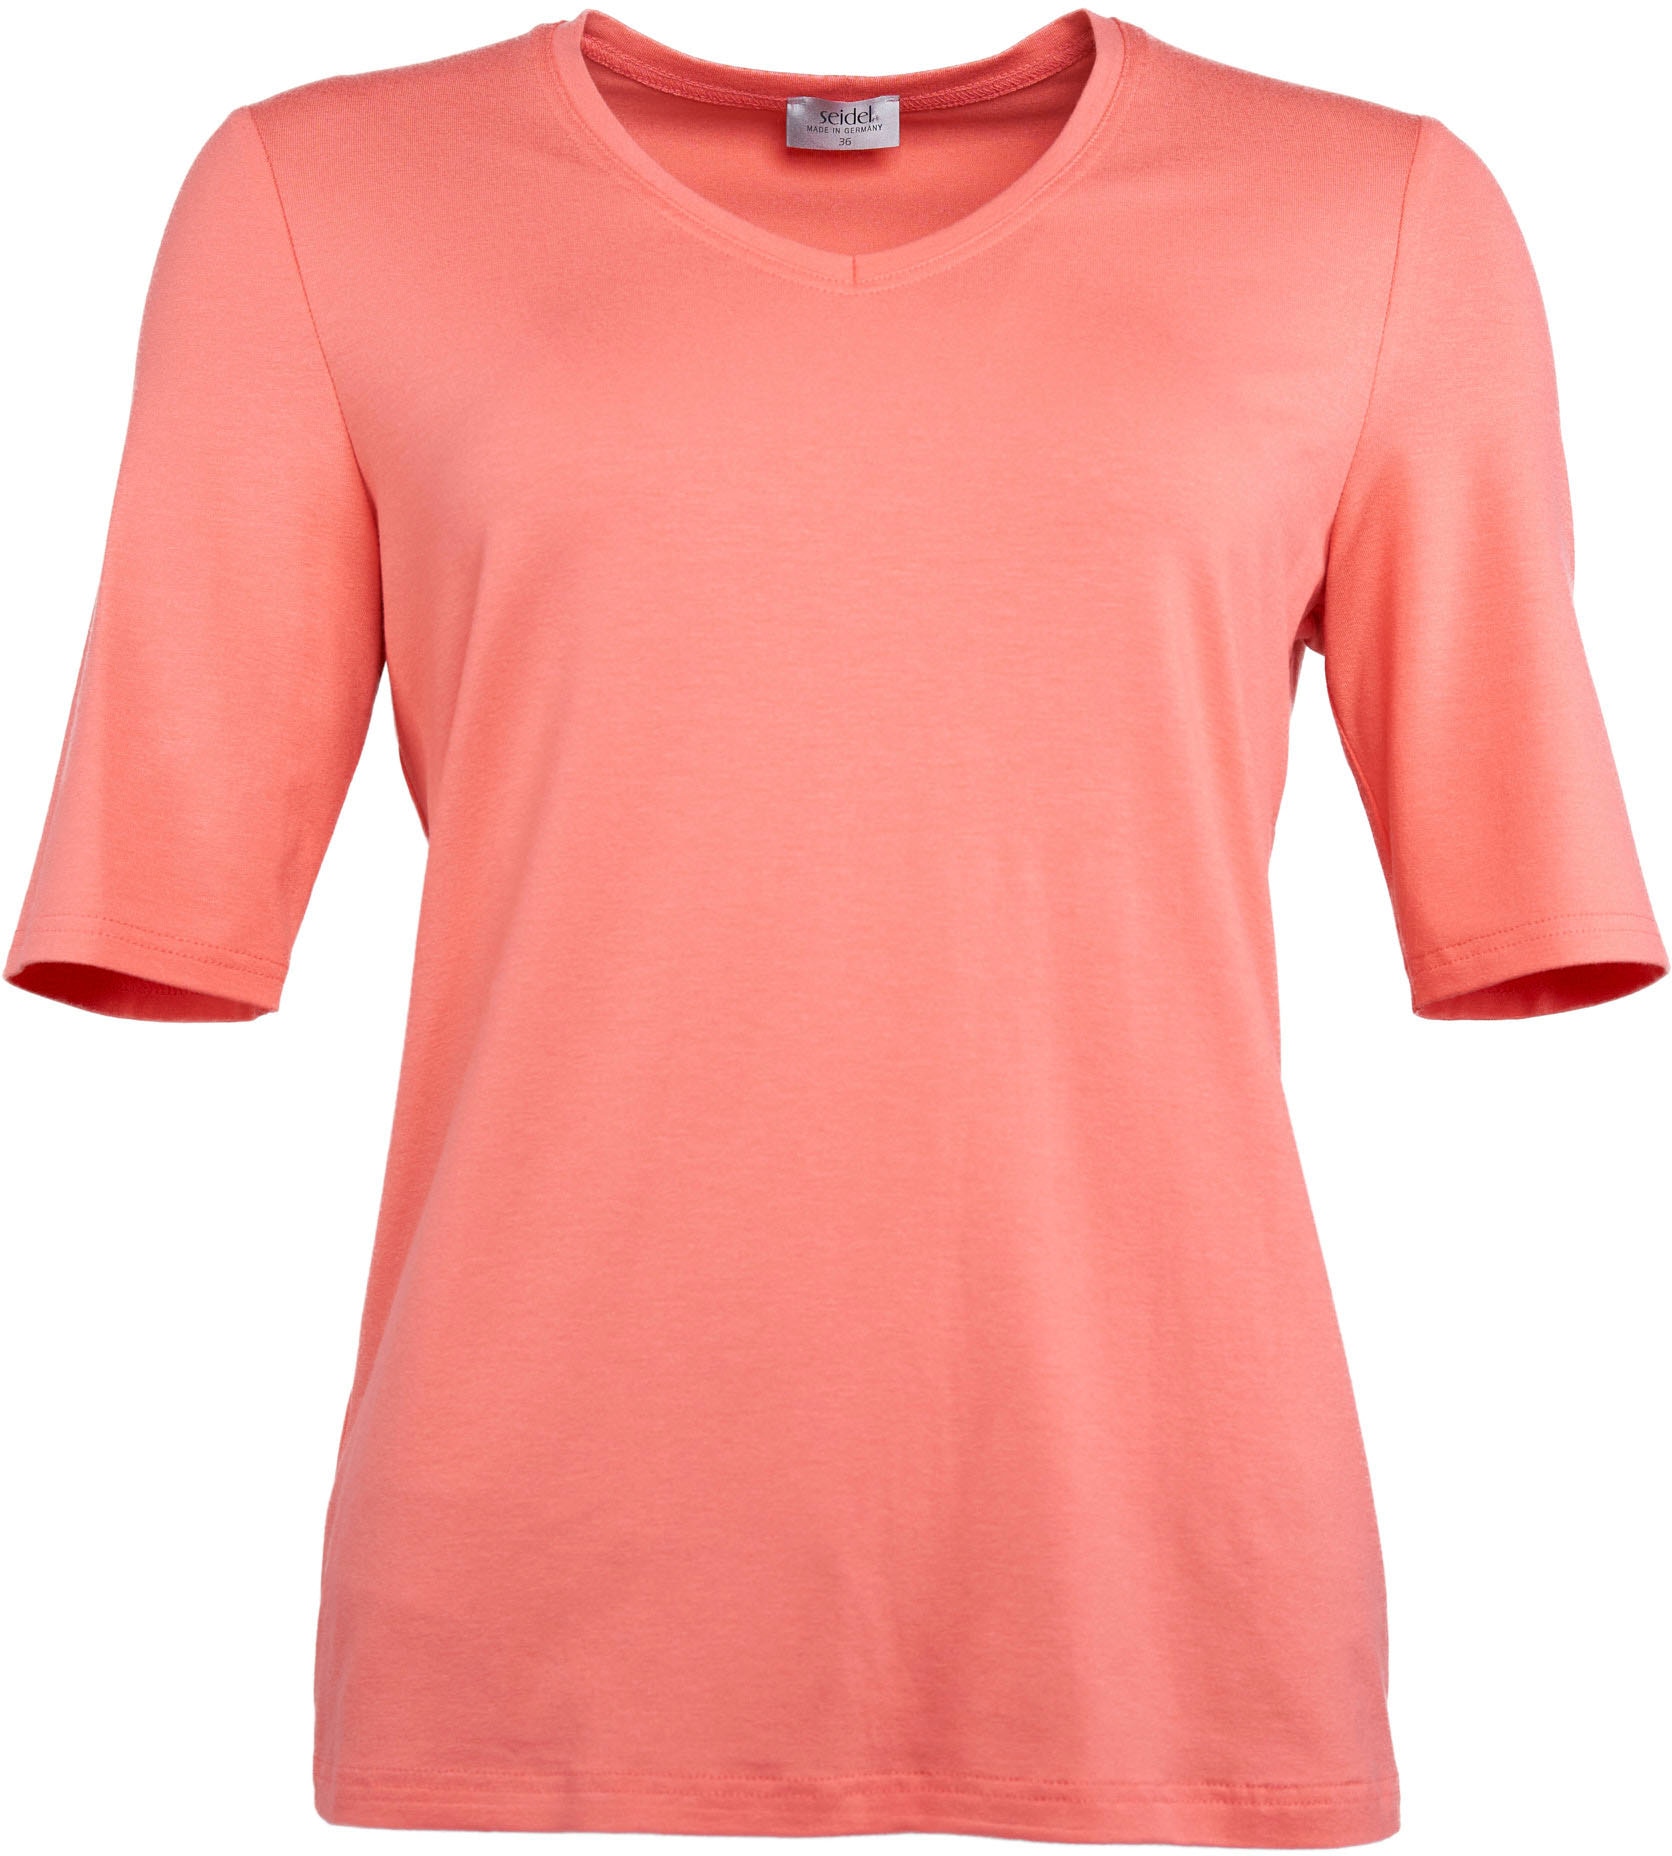 Seidel Moden V-Shirt, mit Halbarm aus softem Material, MADE IN GERMANY  online kaufen bei Jelmoli-Versand Schweiz